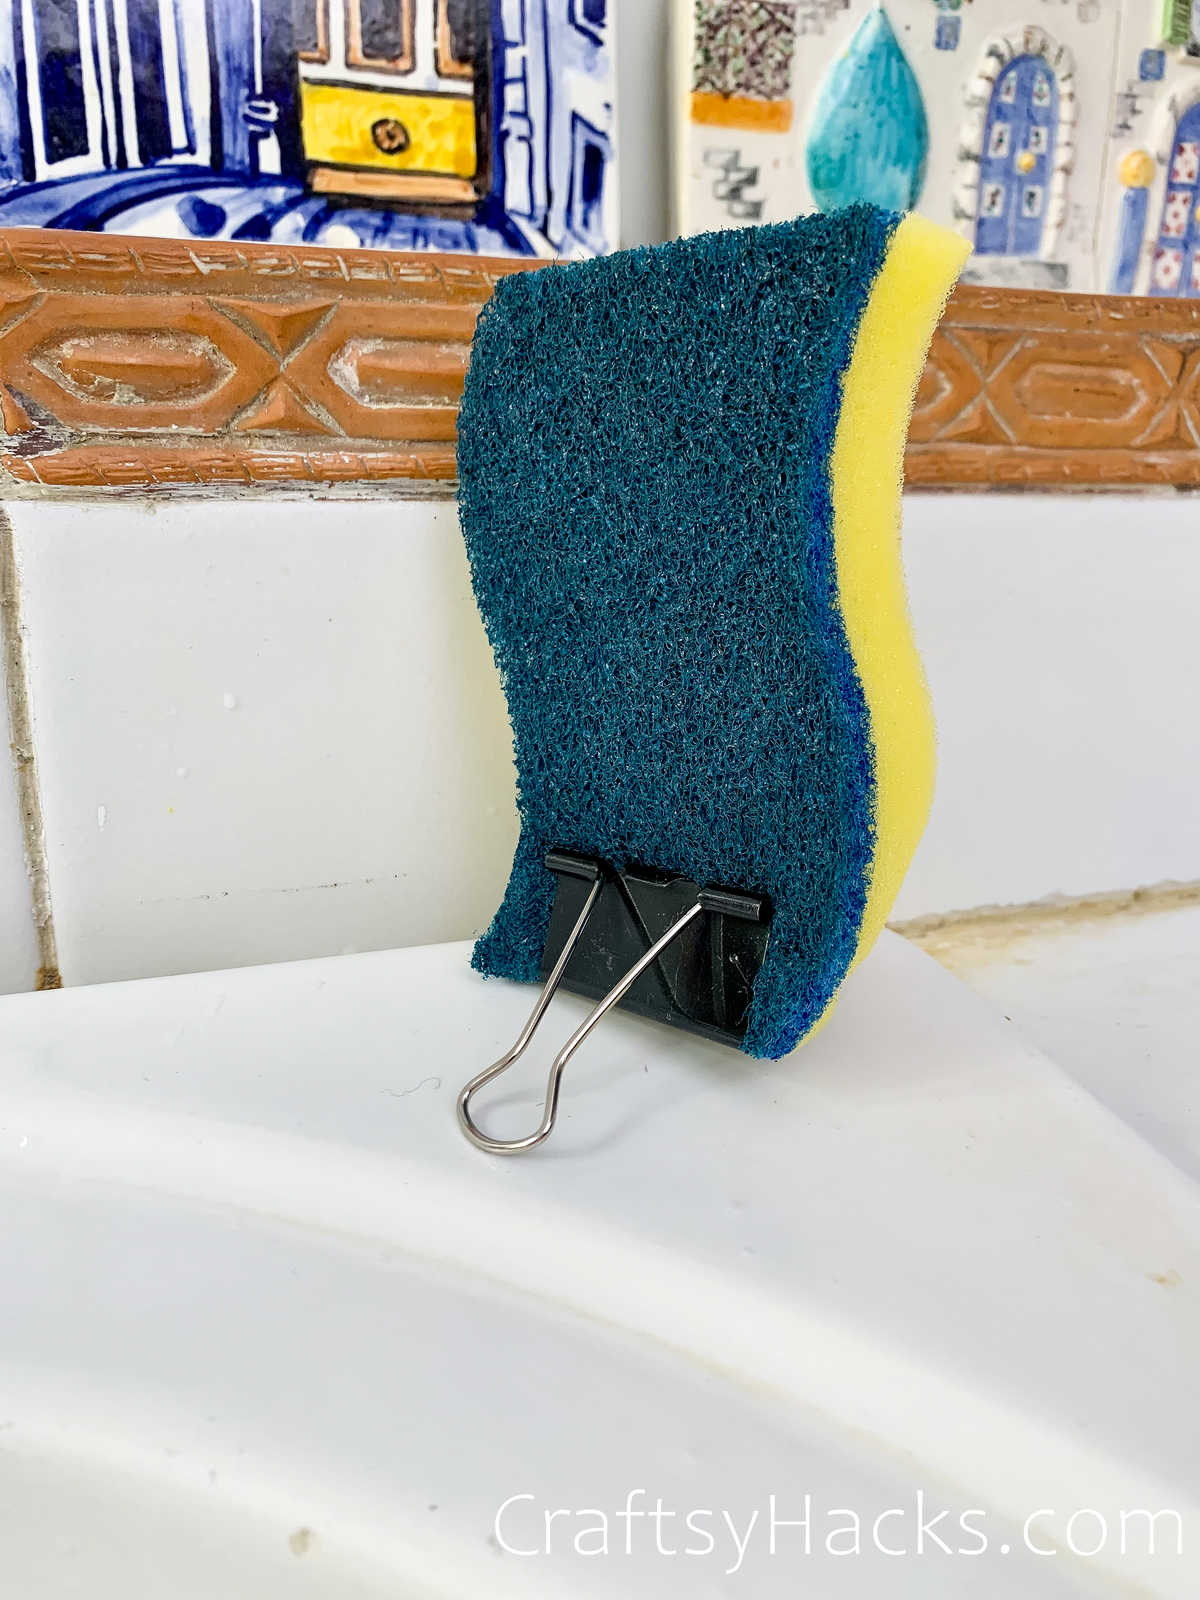 keep kitchen sponge upright to dry